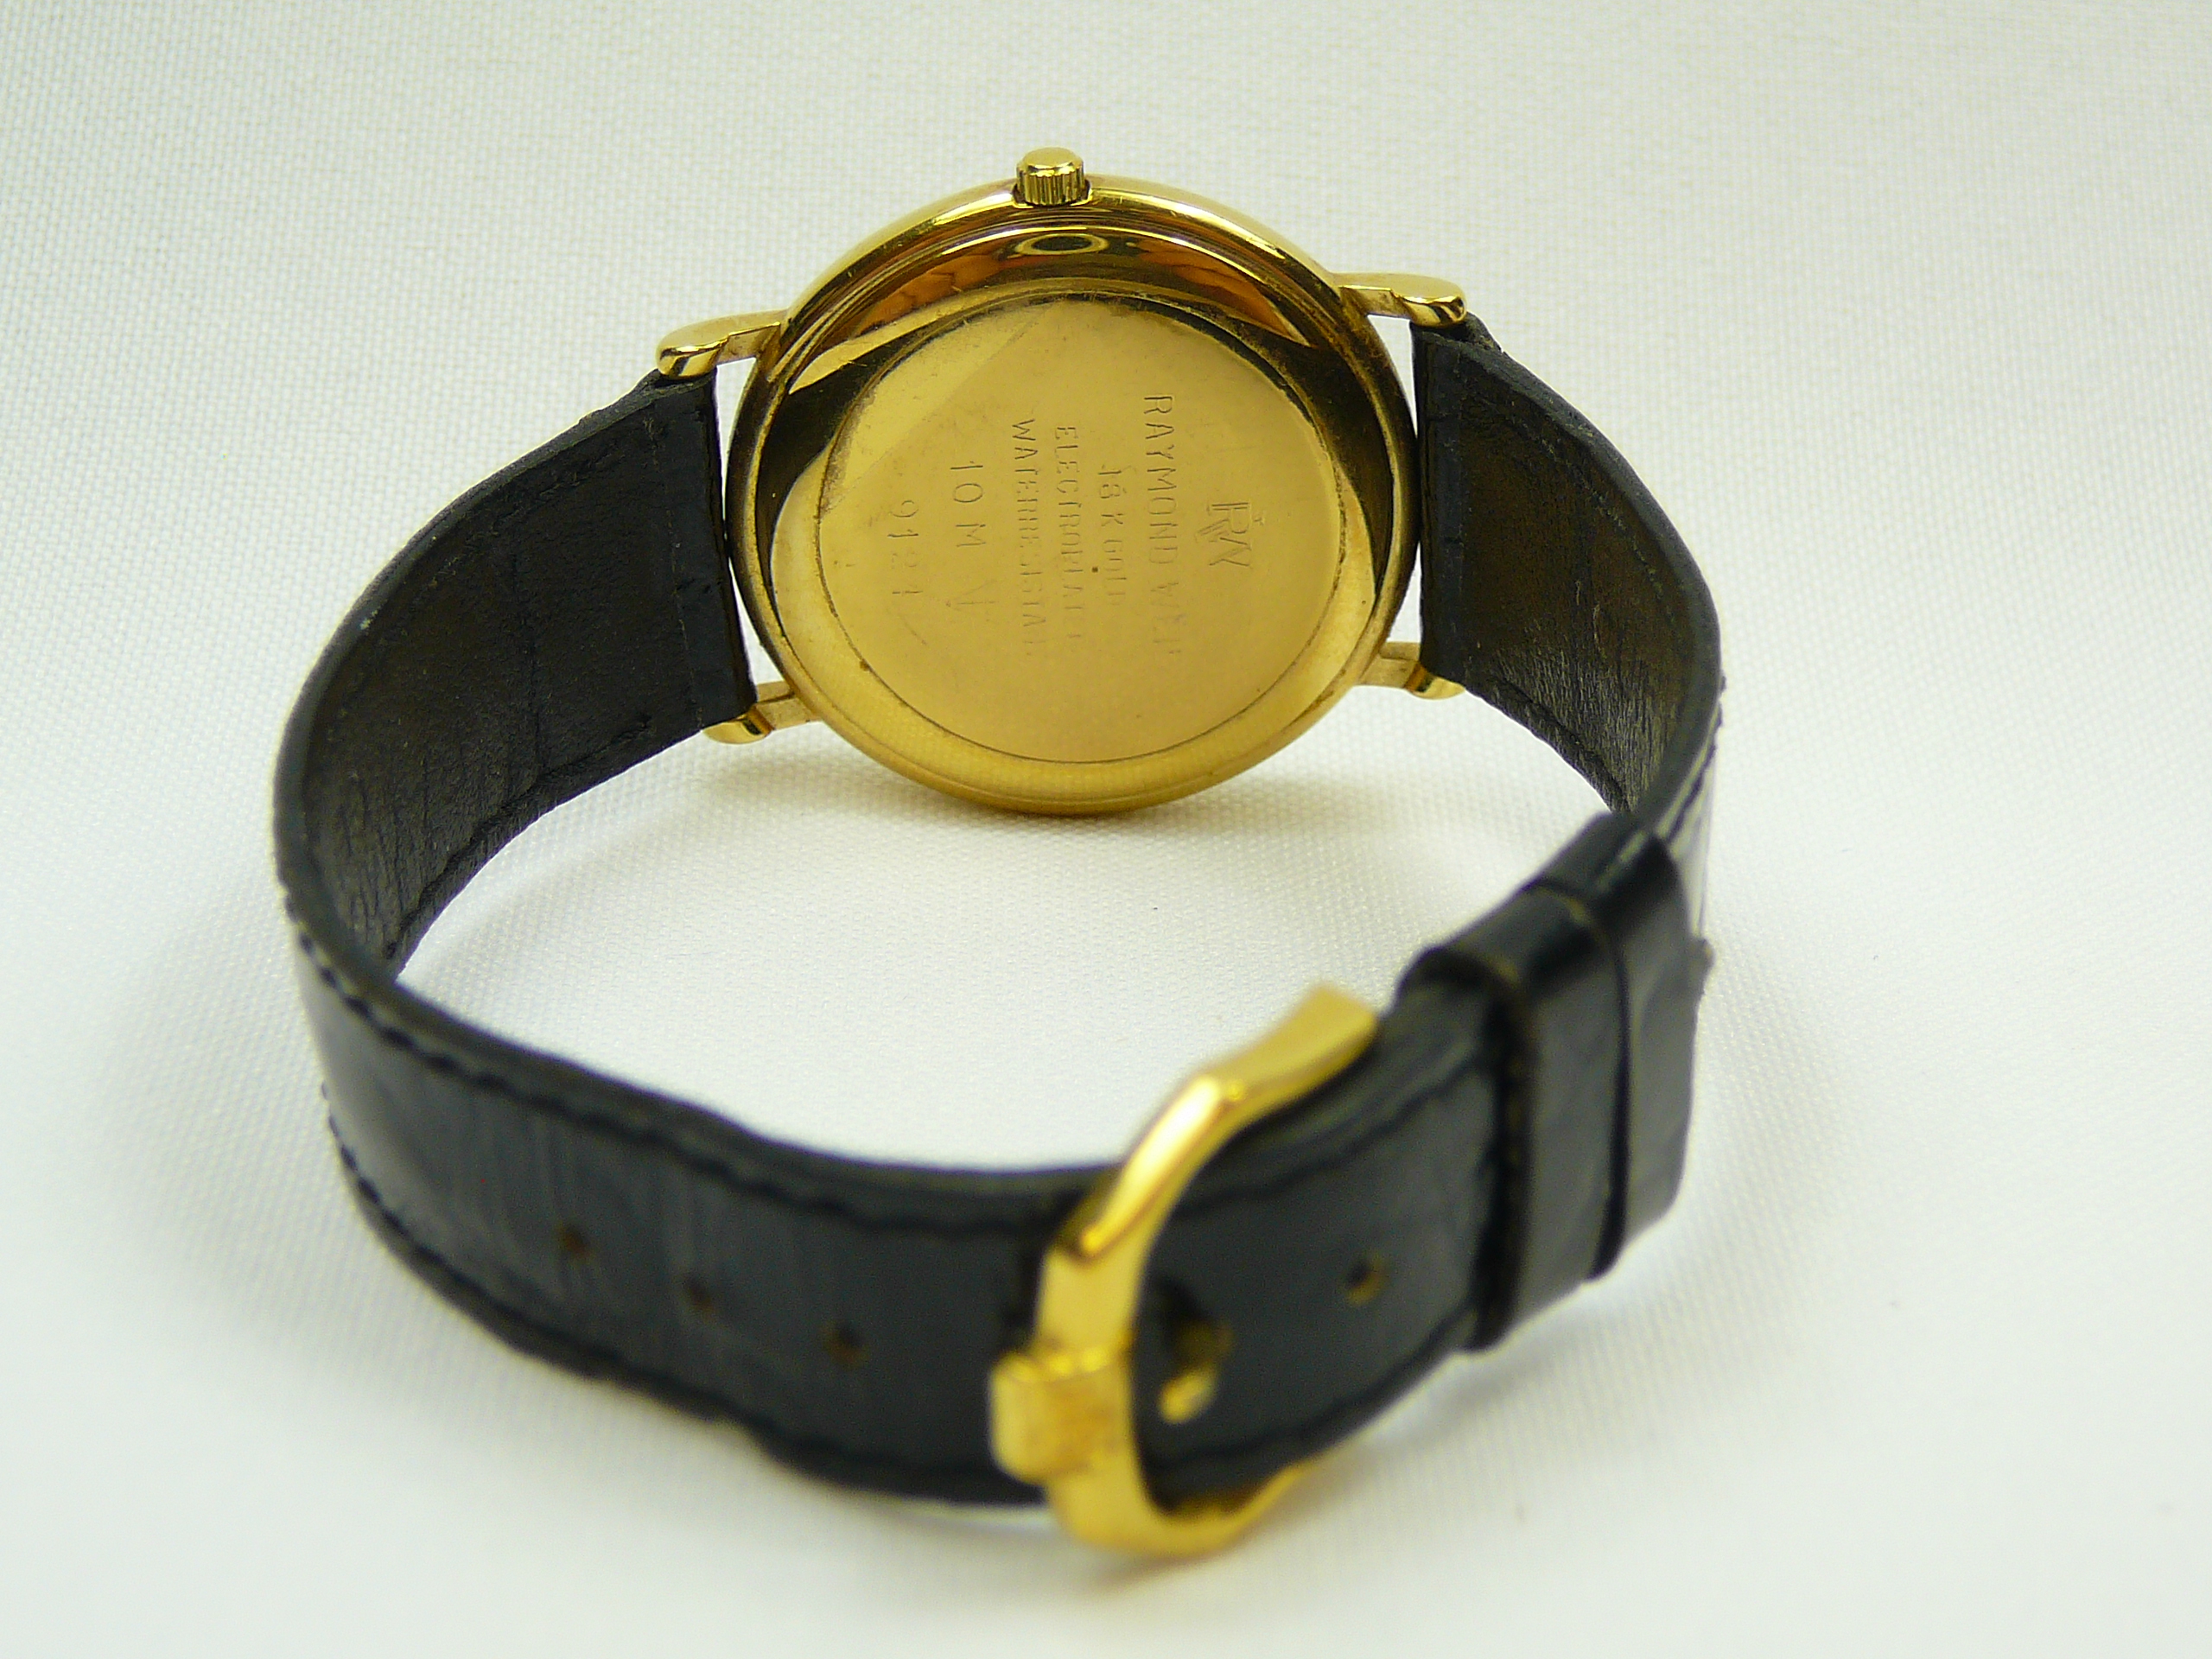 Gents Raymond Weil Wrist Watch - Image 3 of 3